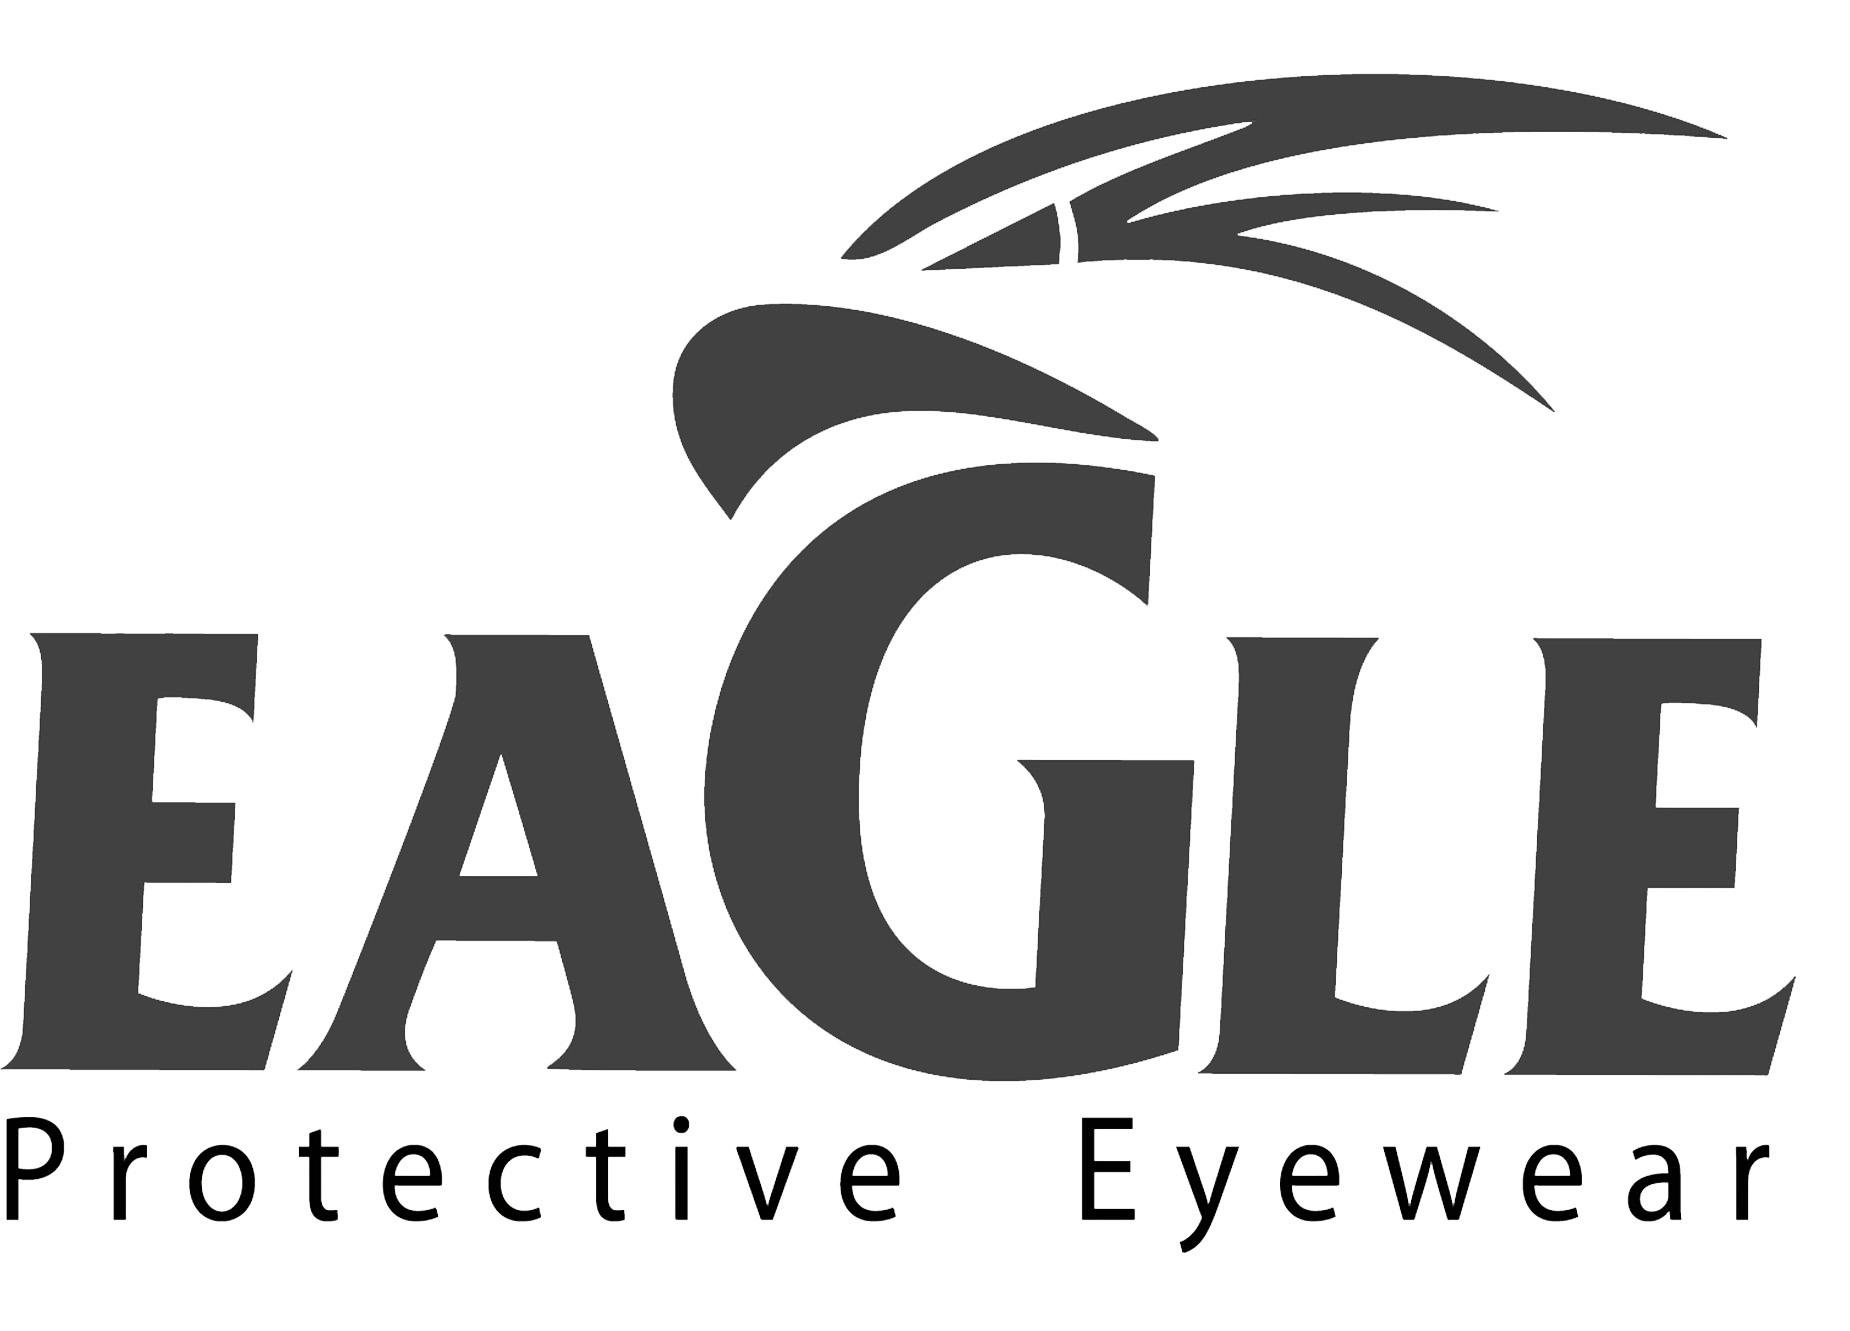 EAGLE Protective Eyewear